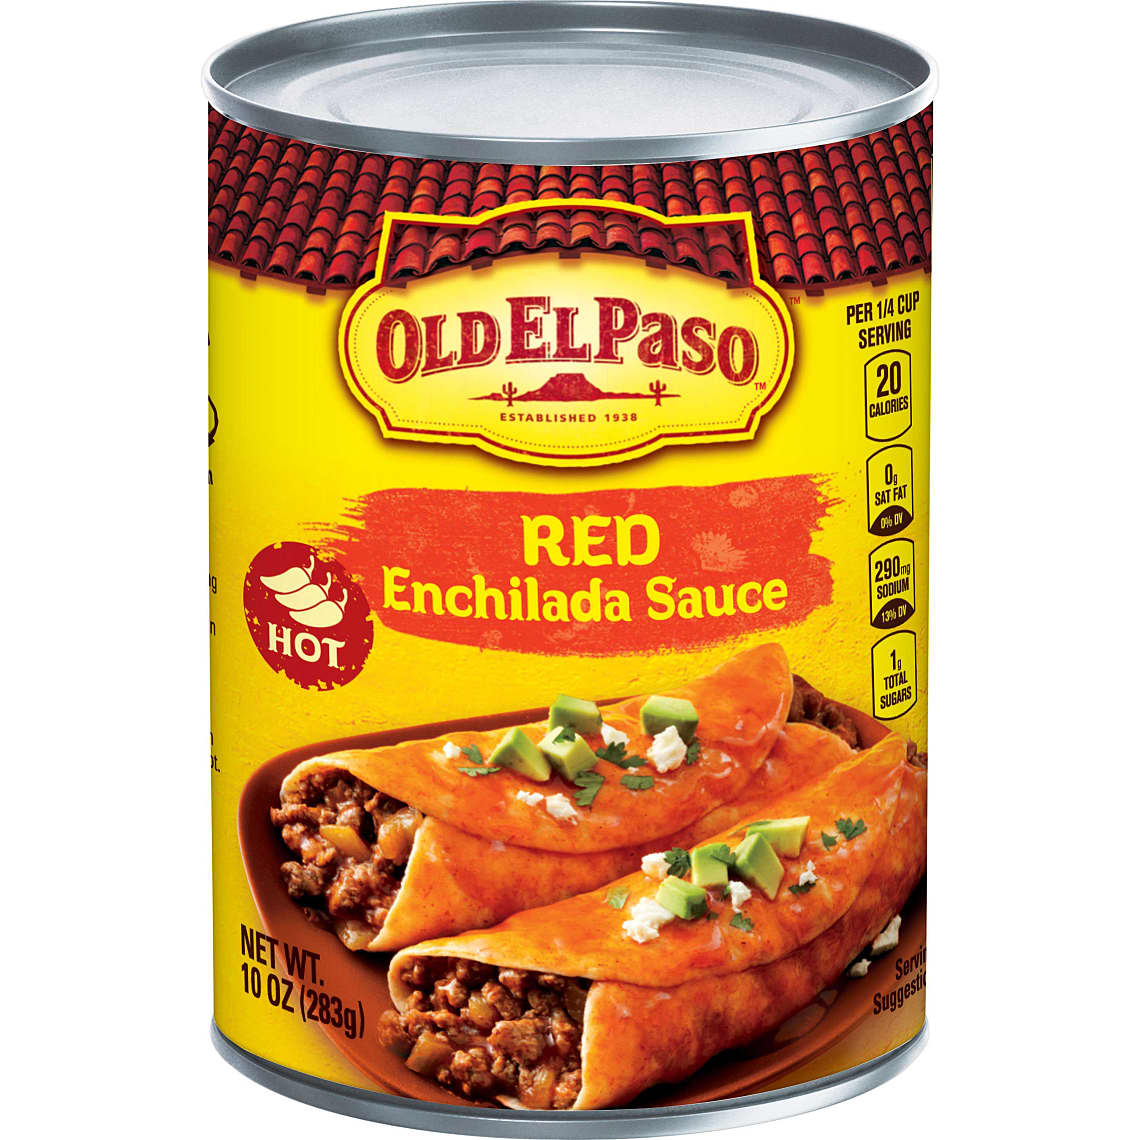 Old El Paso Hot Enchilada Sauce, 10 oz